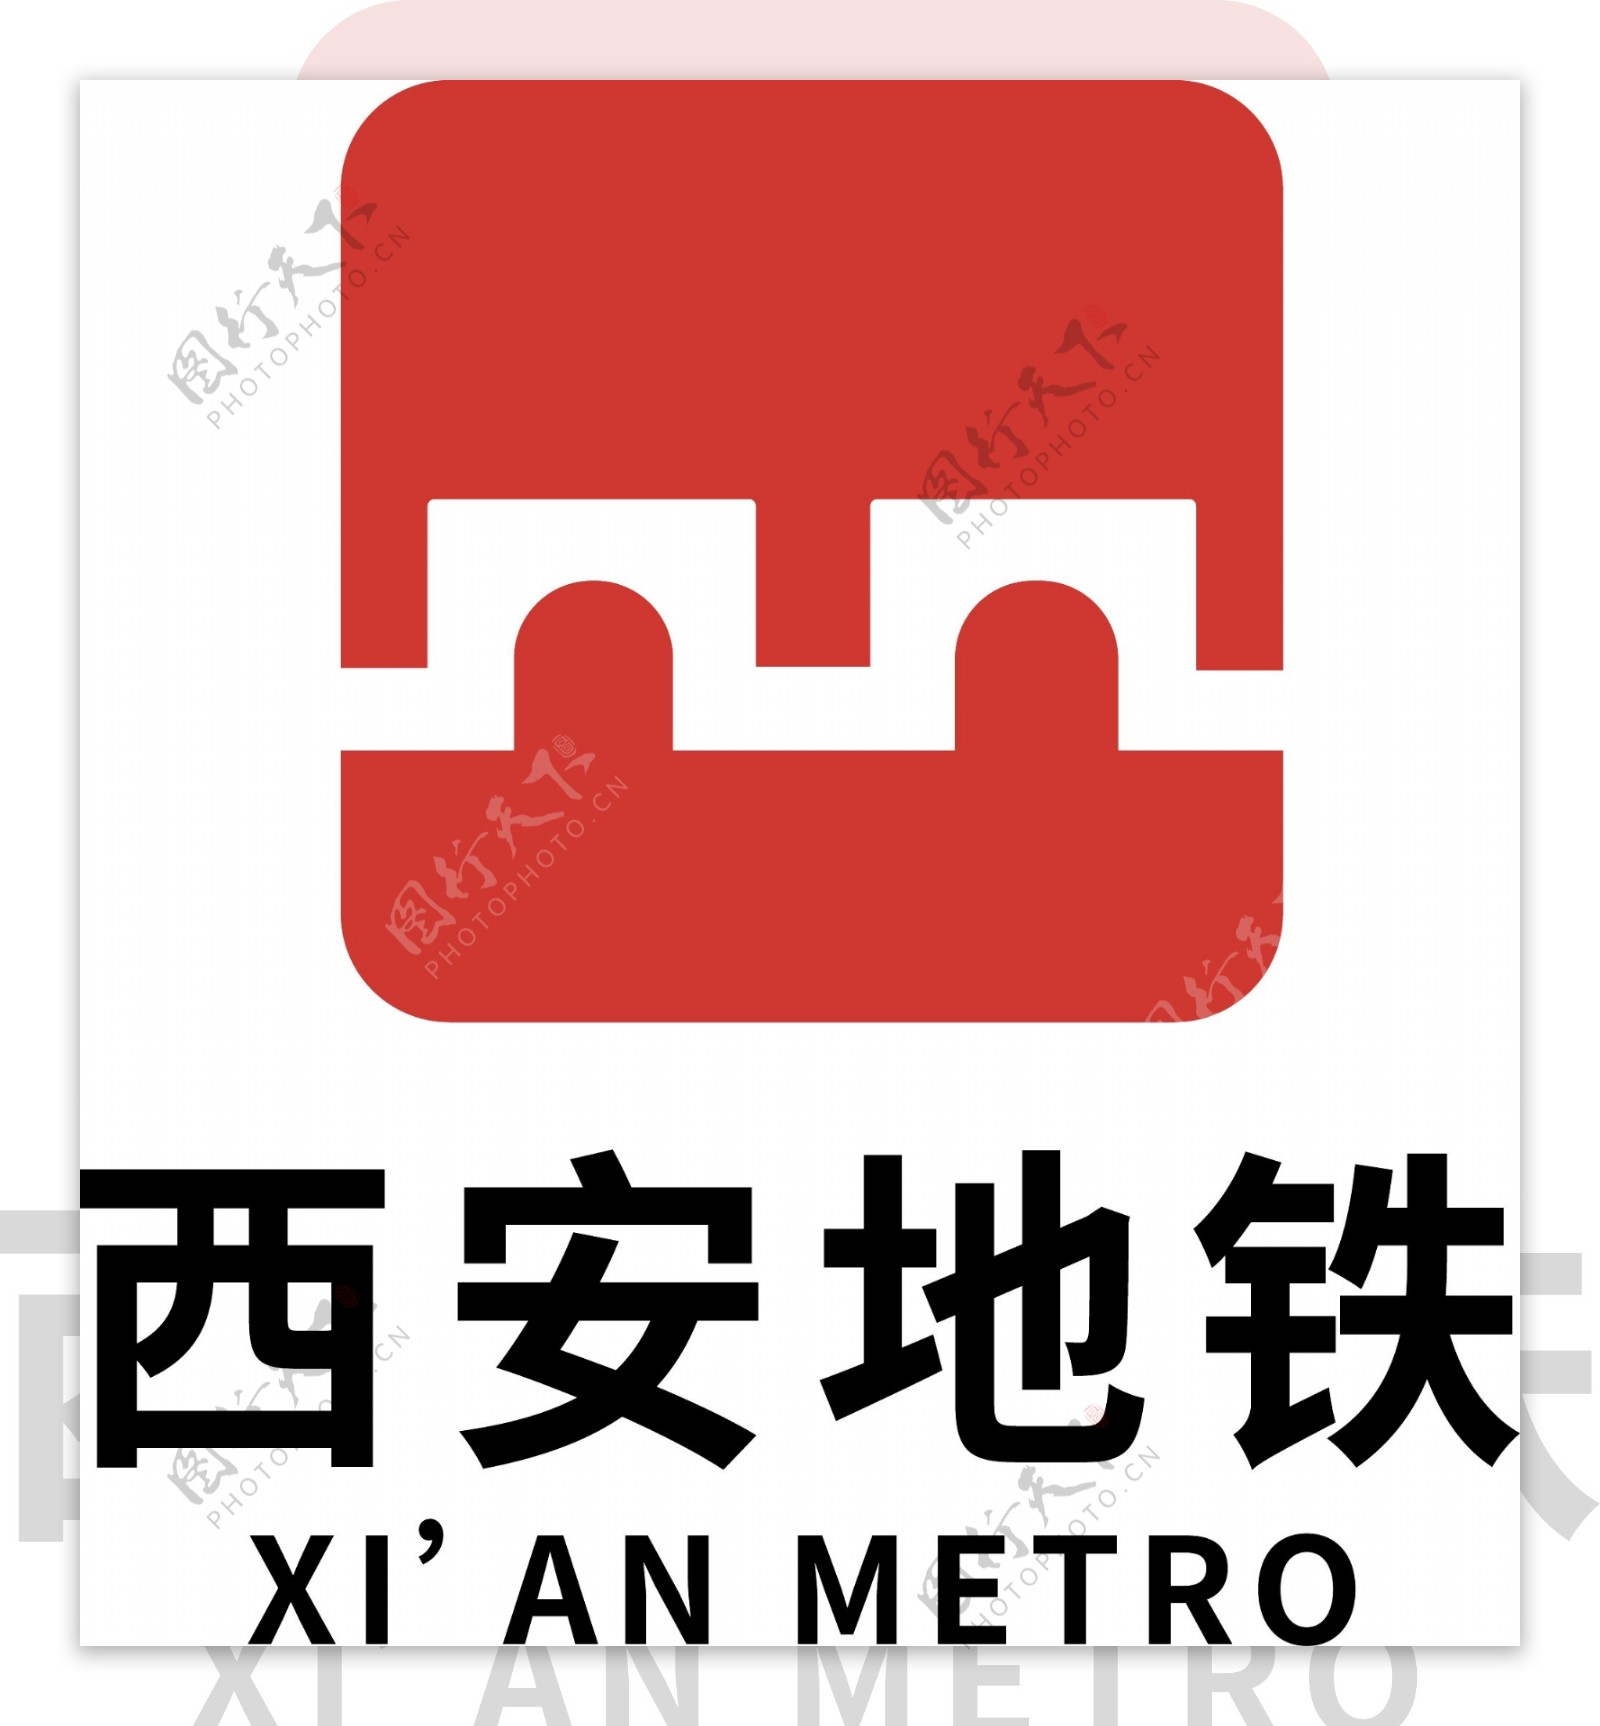 西安地铁logo